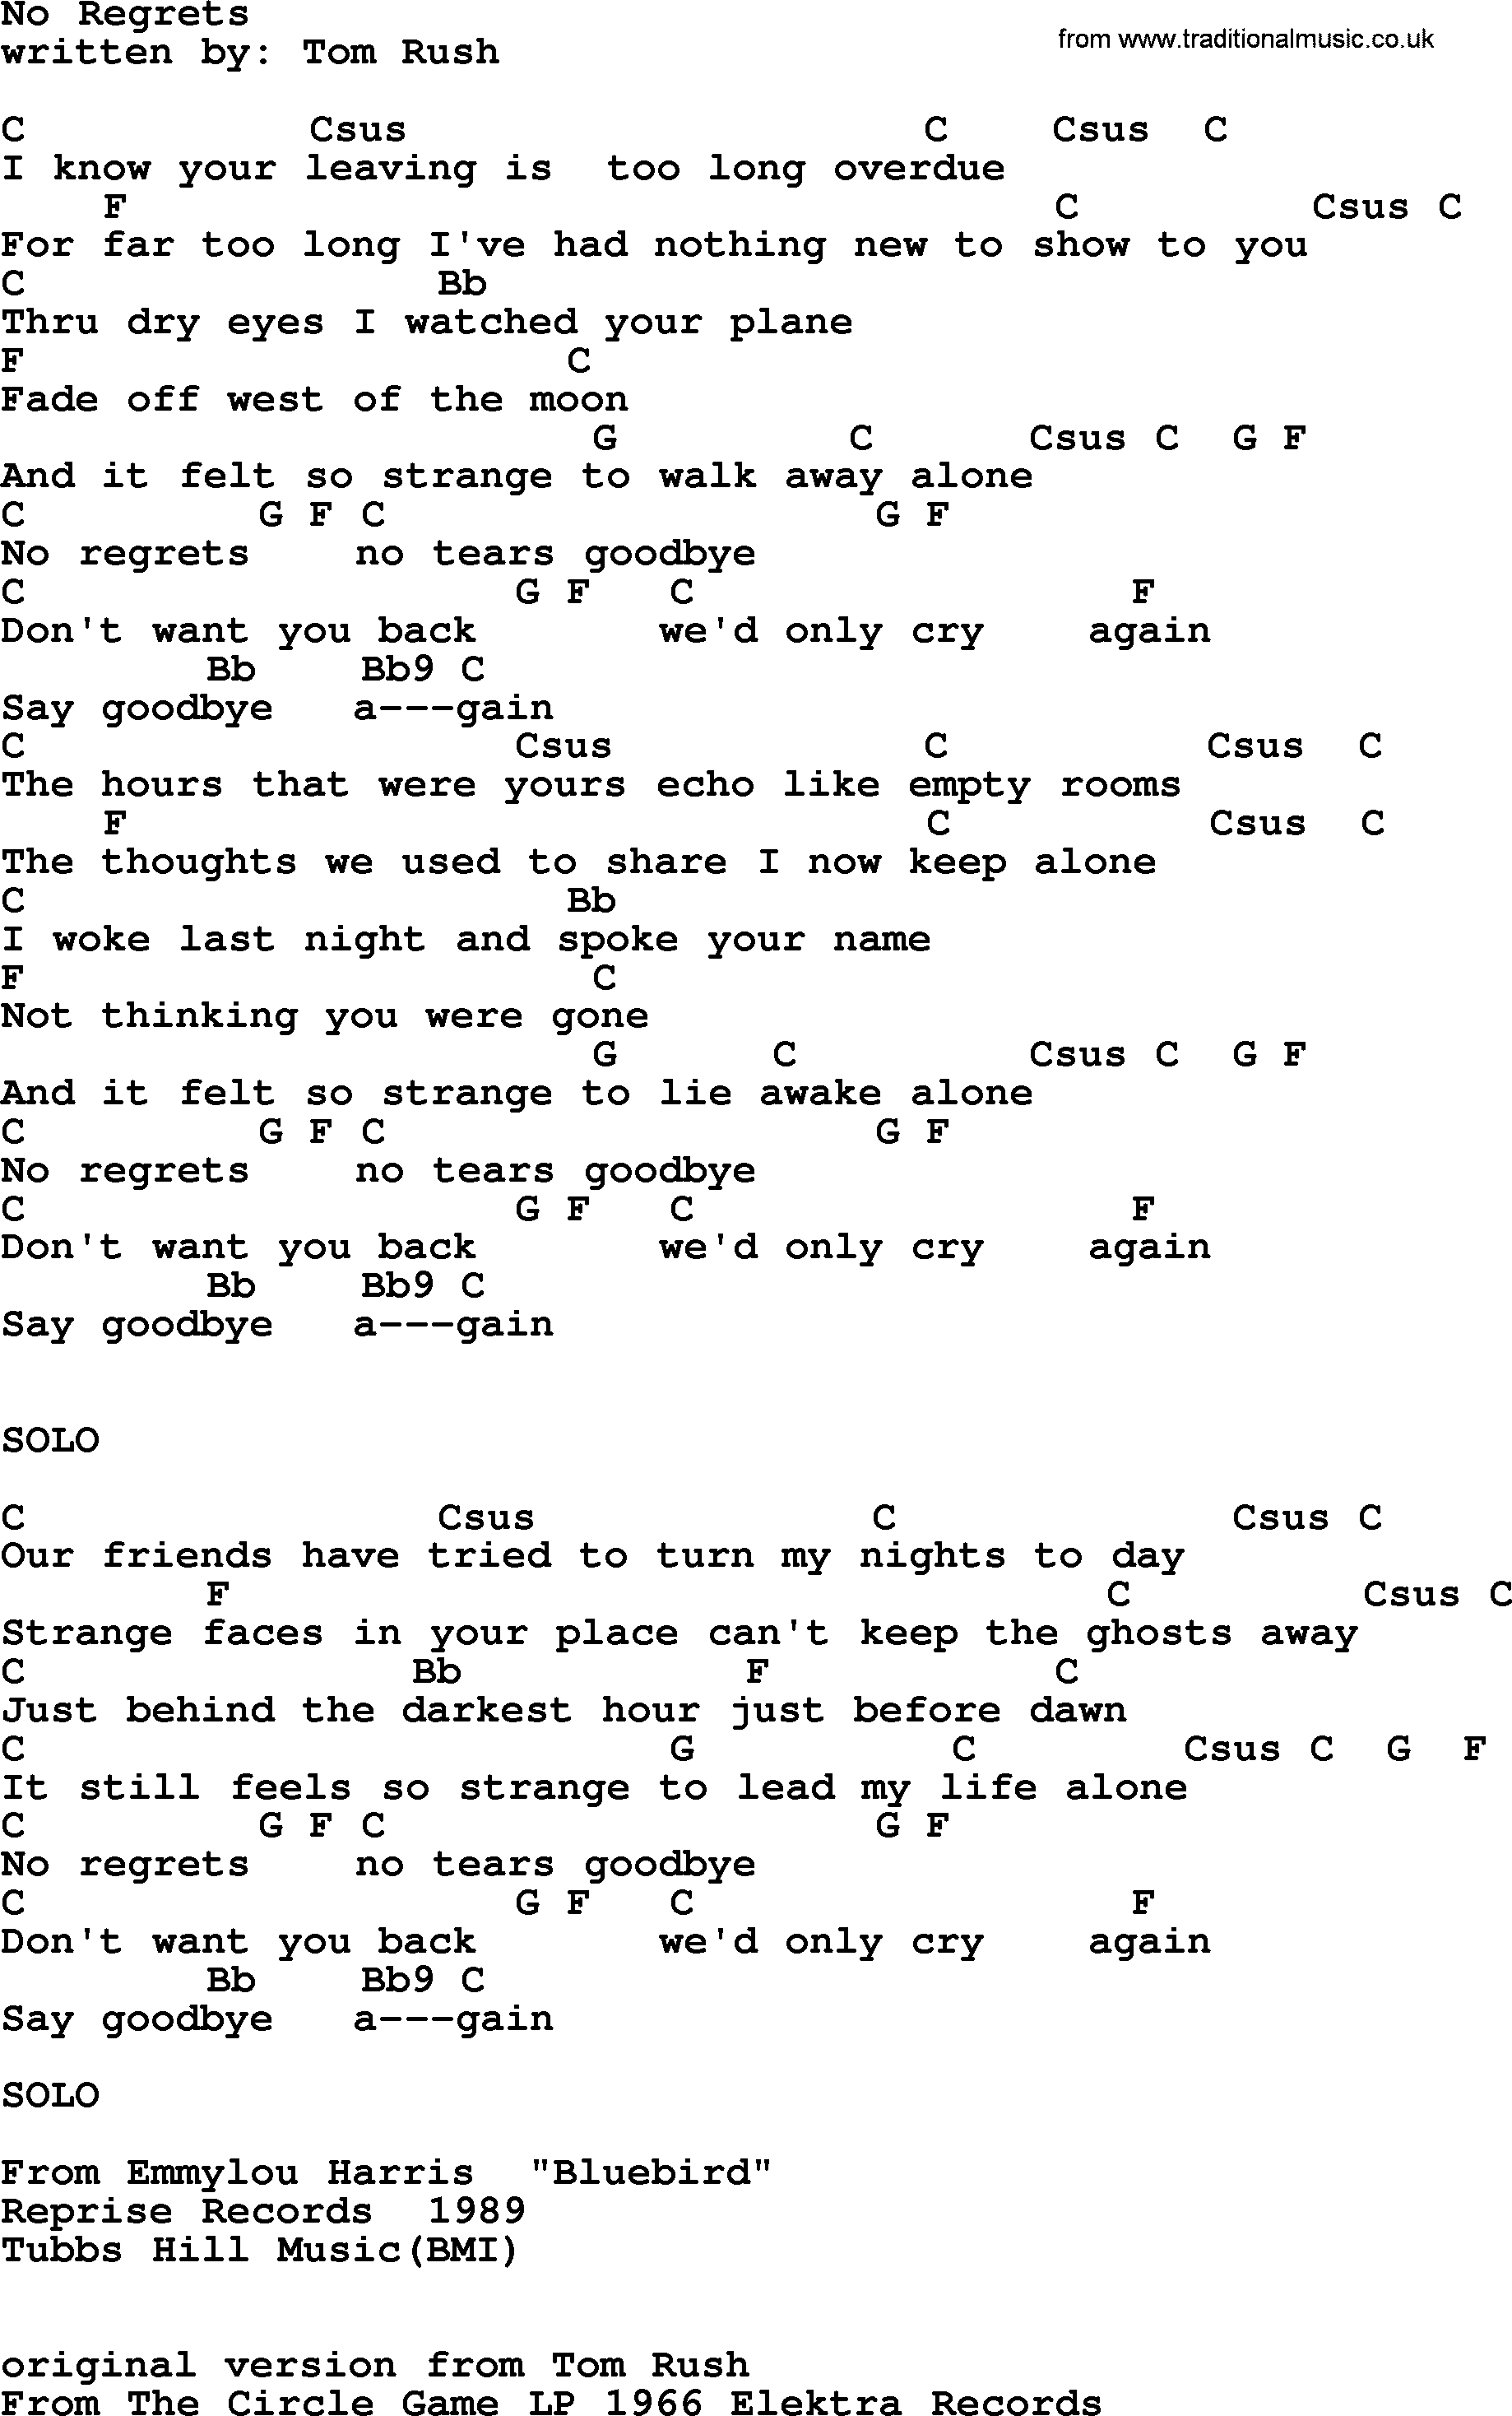 Emmylou Harris song: No Regrets lyrics and chords